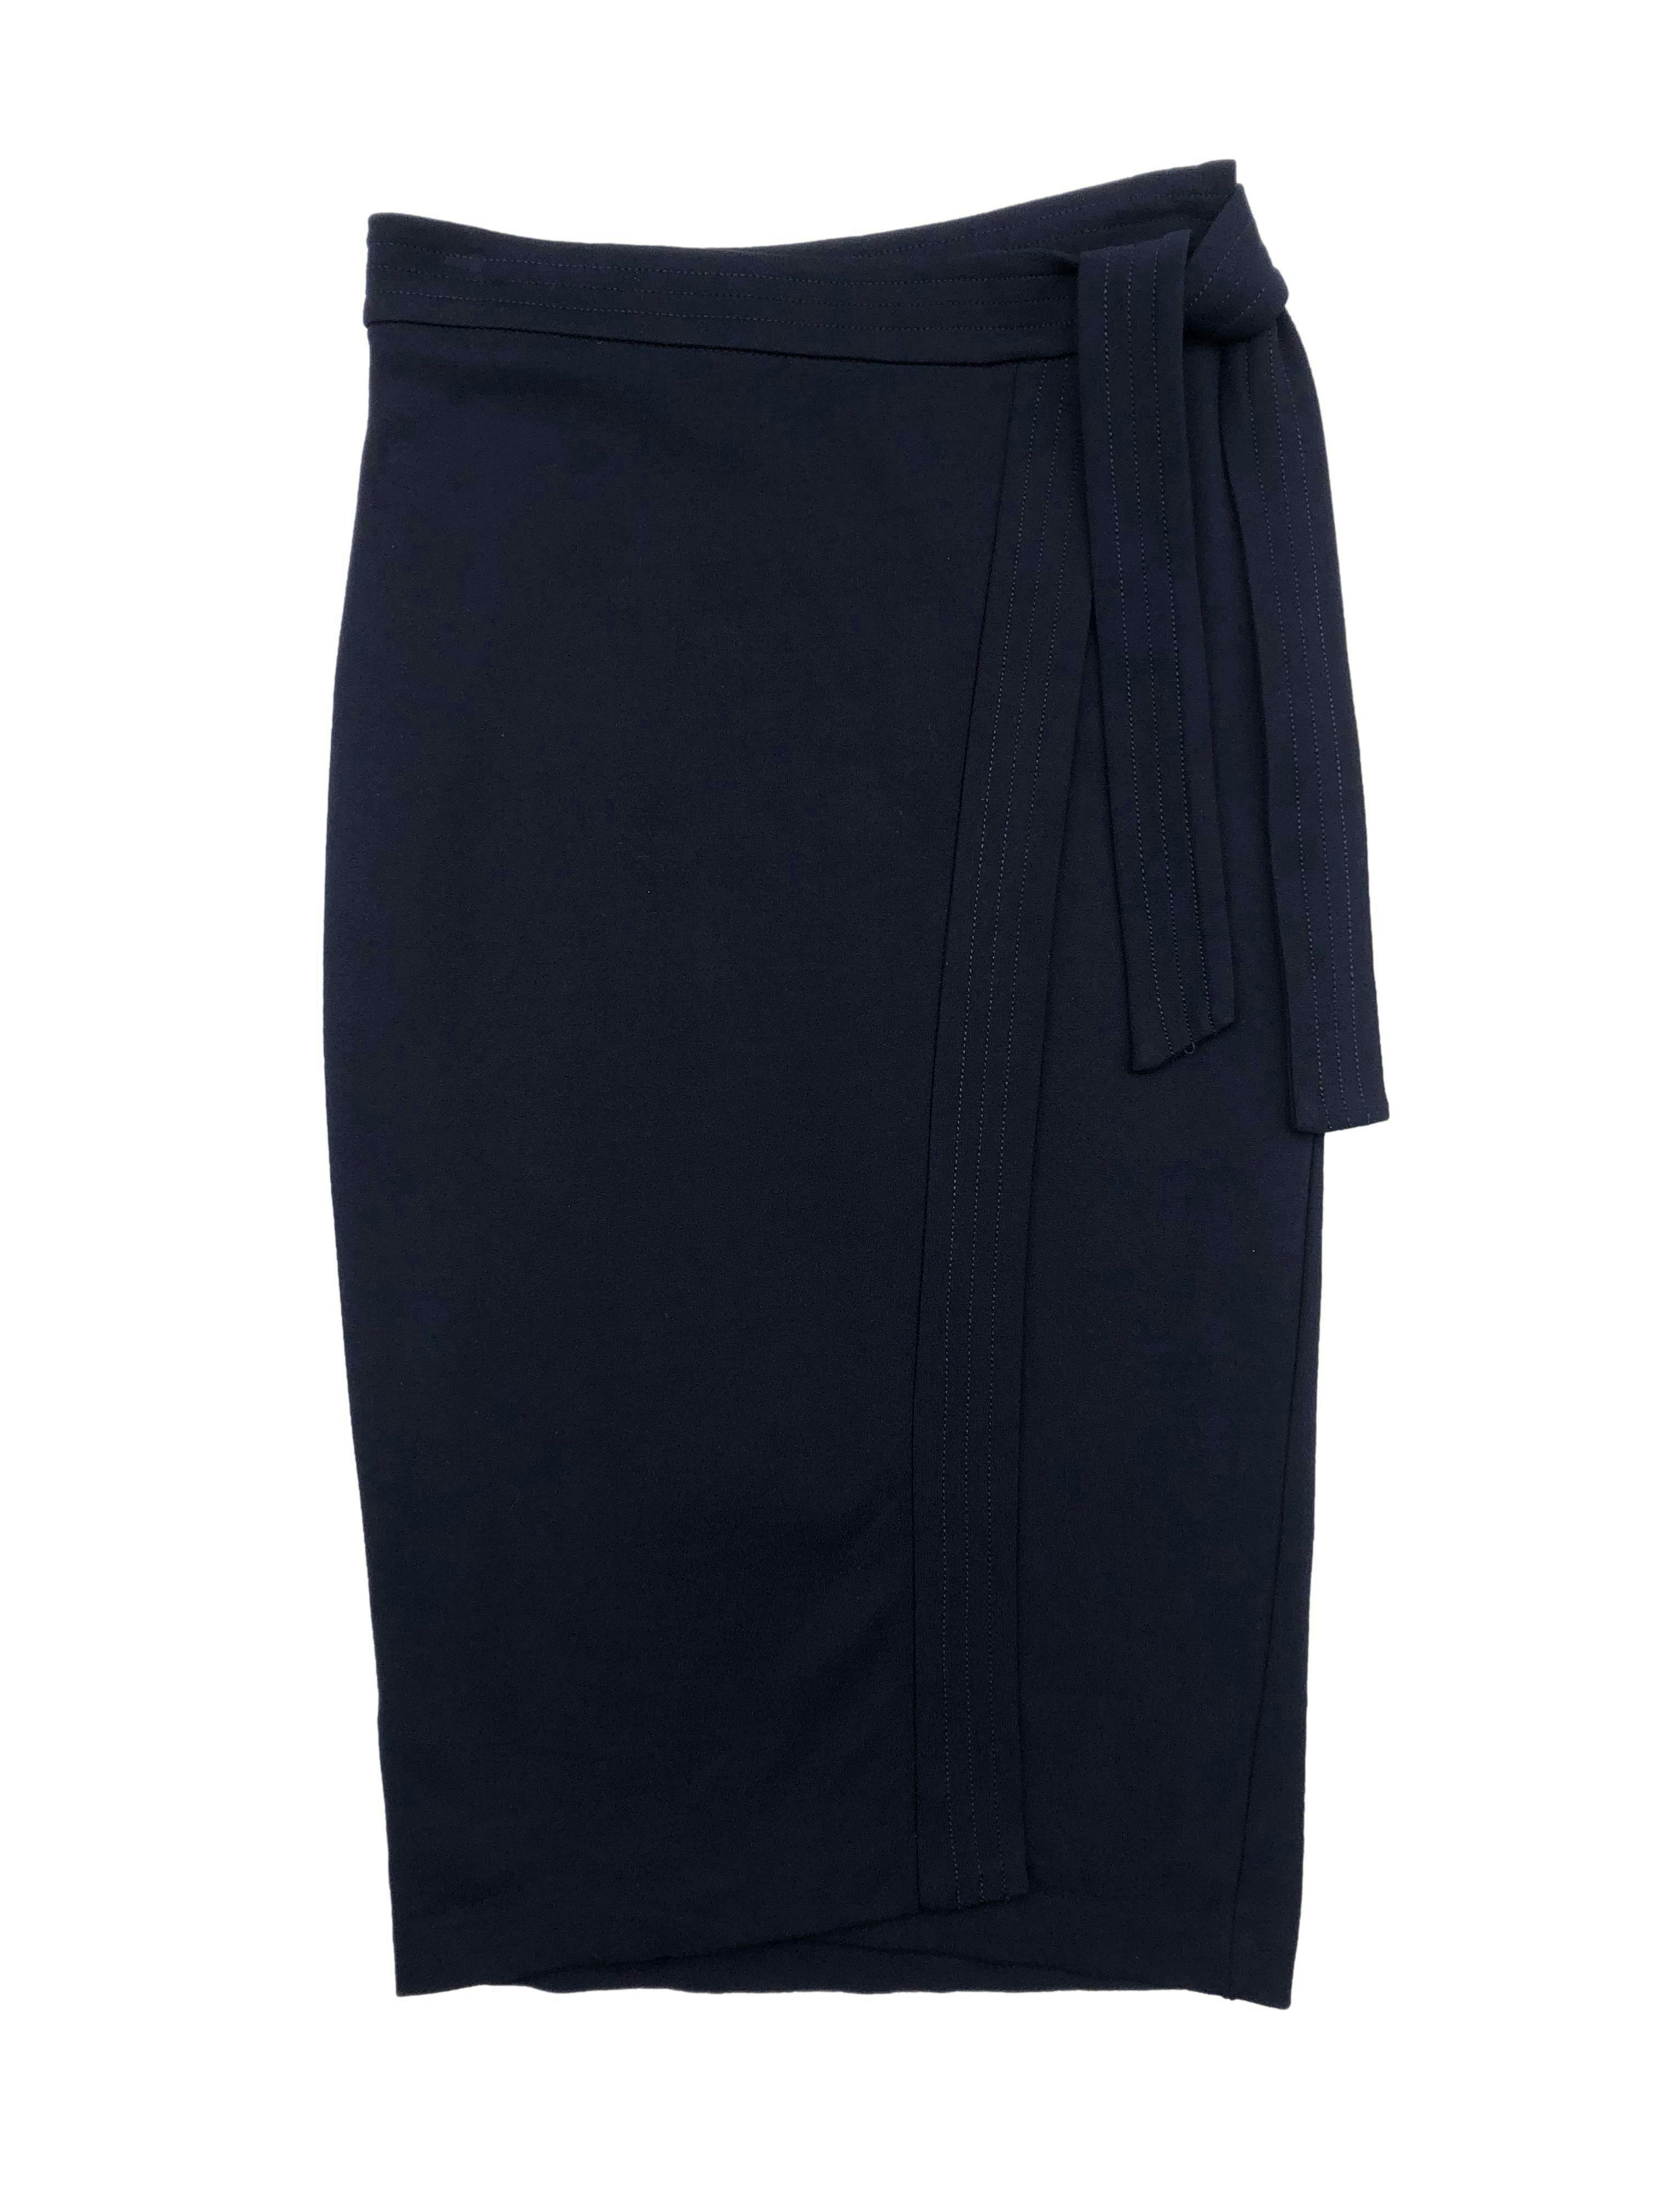 Falda midi Mango envolvente azul marino, con forro, botón y cintos para nudo lateral. Cintura 68cm, Largo 71cm,